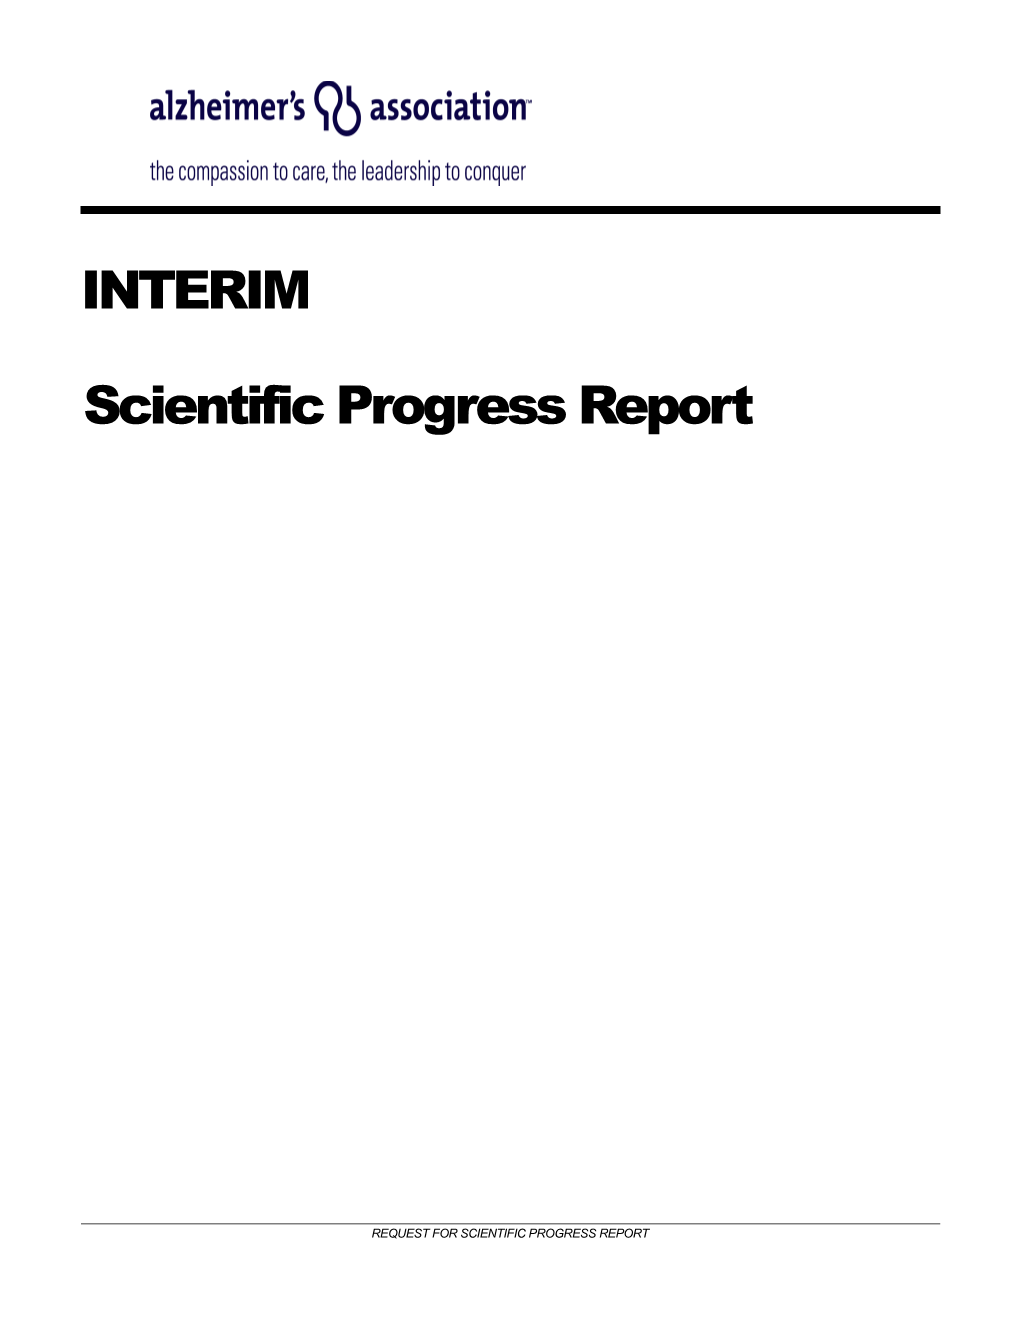 Scientific Progress Report